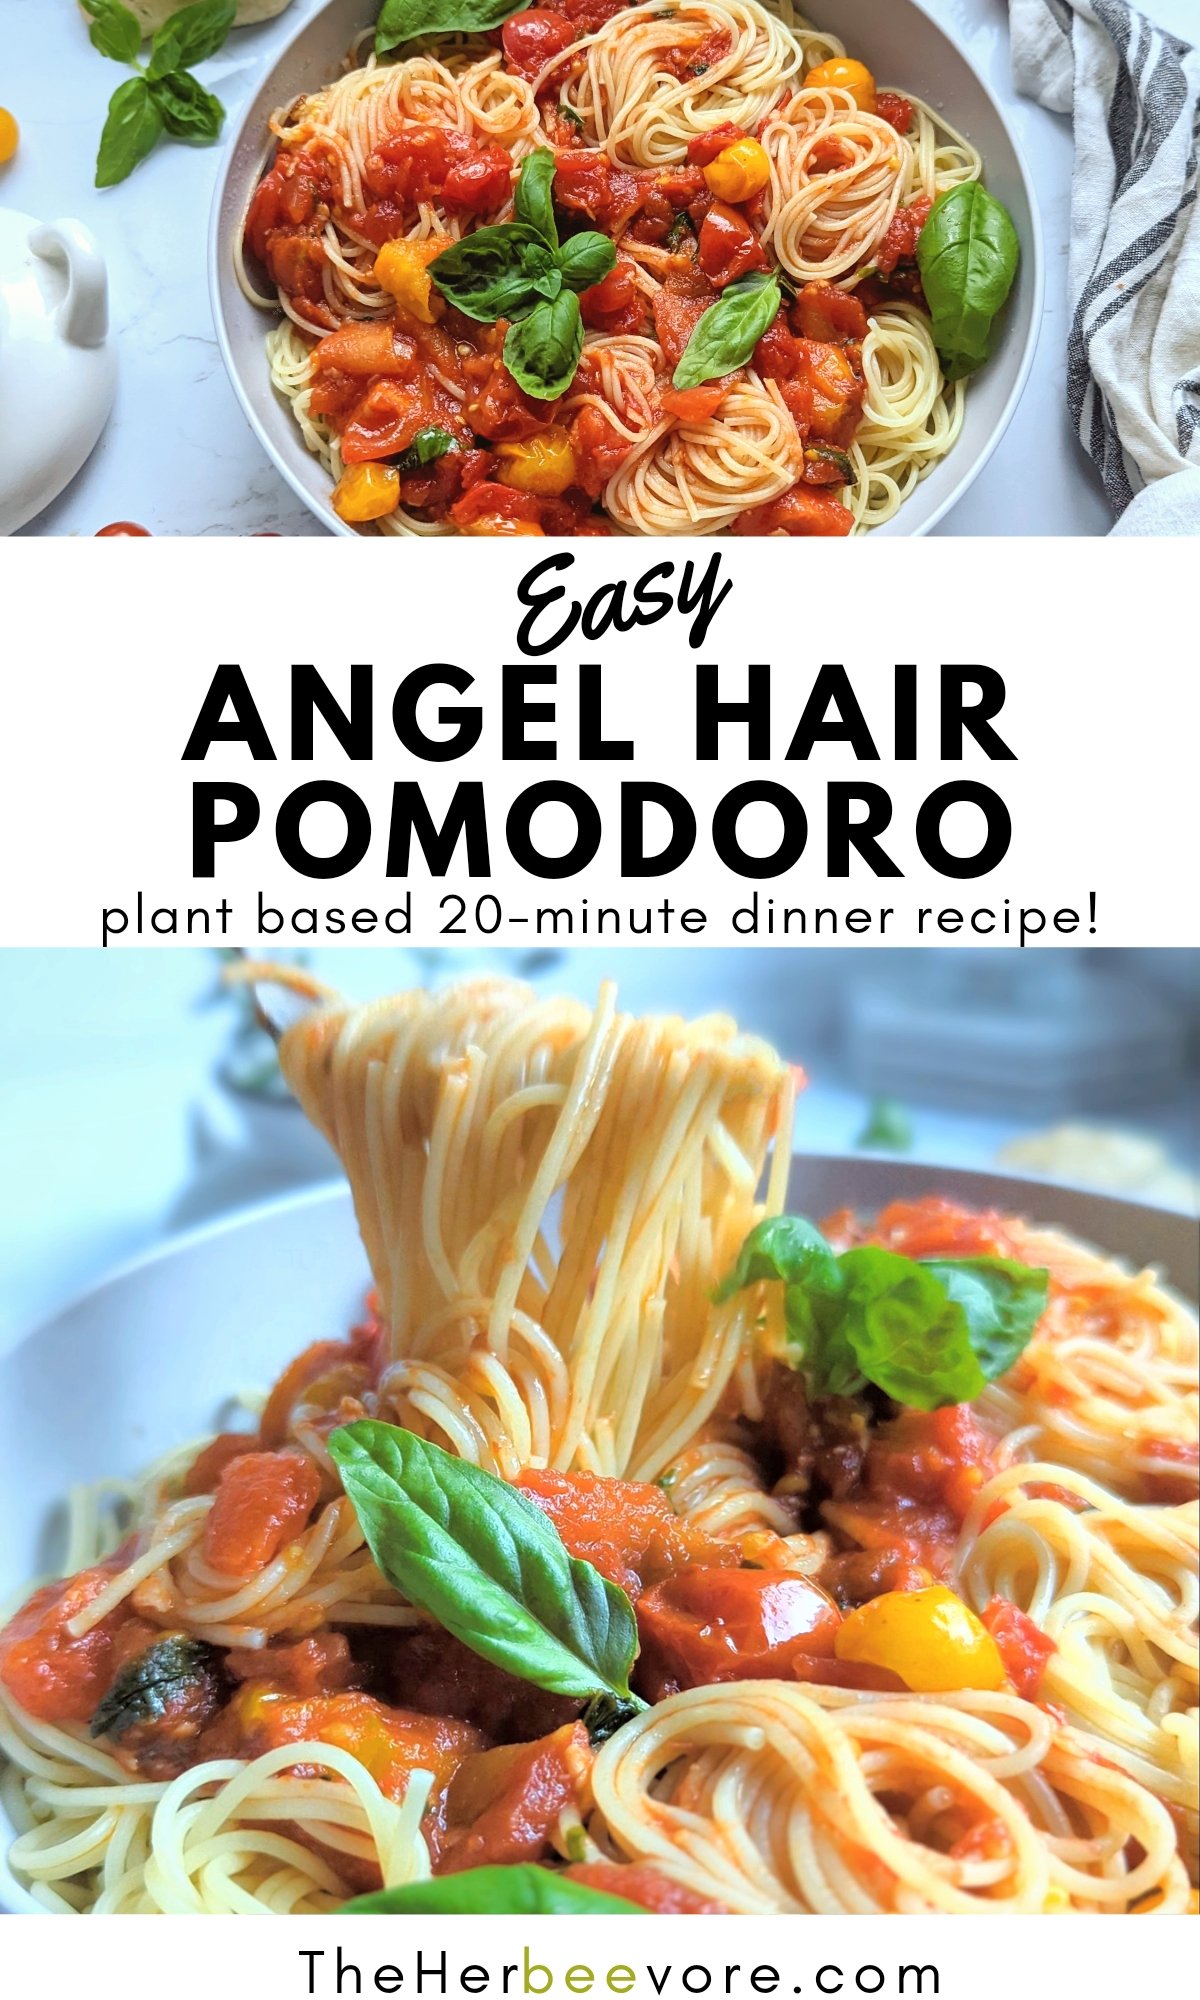 angel hair pomodoro pasta sauce recipe vegan gluten free no cheese pasta tomato sauce without cheese or dairy